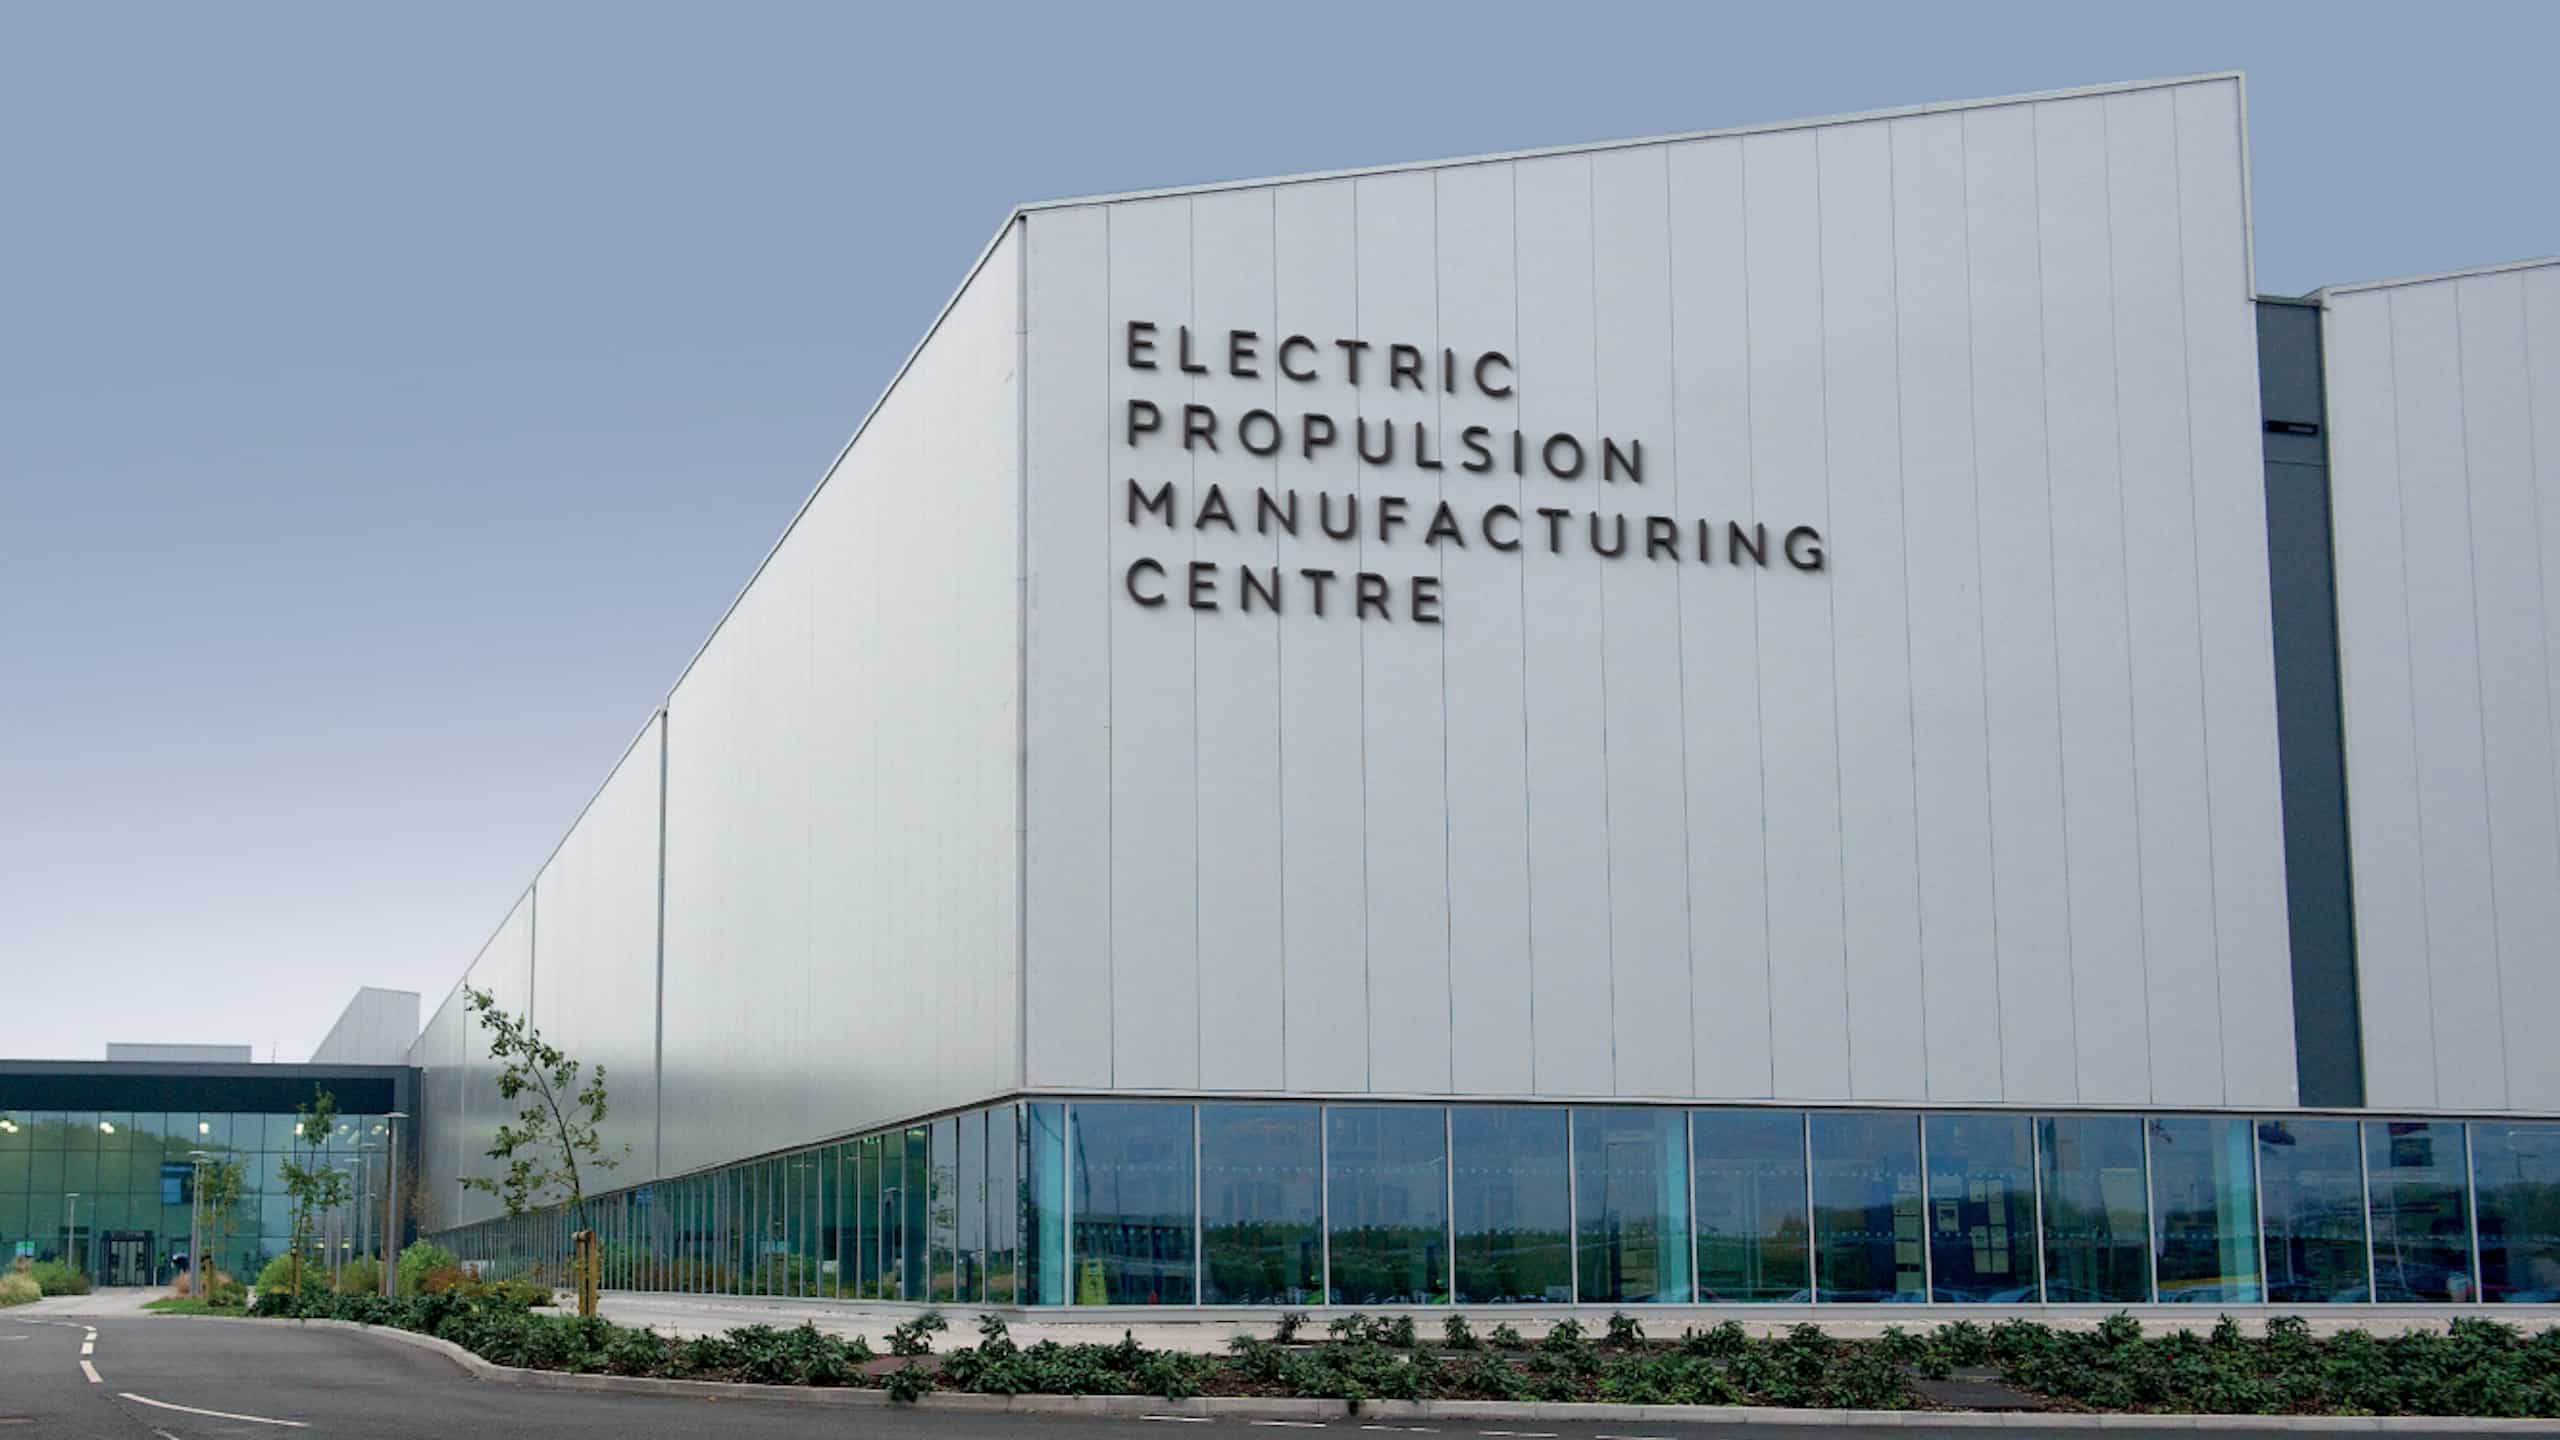 Jaguar Electric propulsion Manufacturing Centre